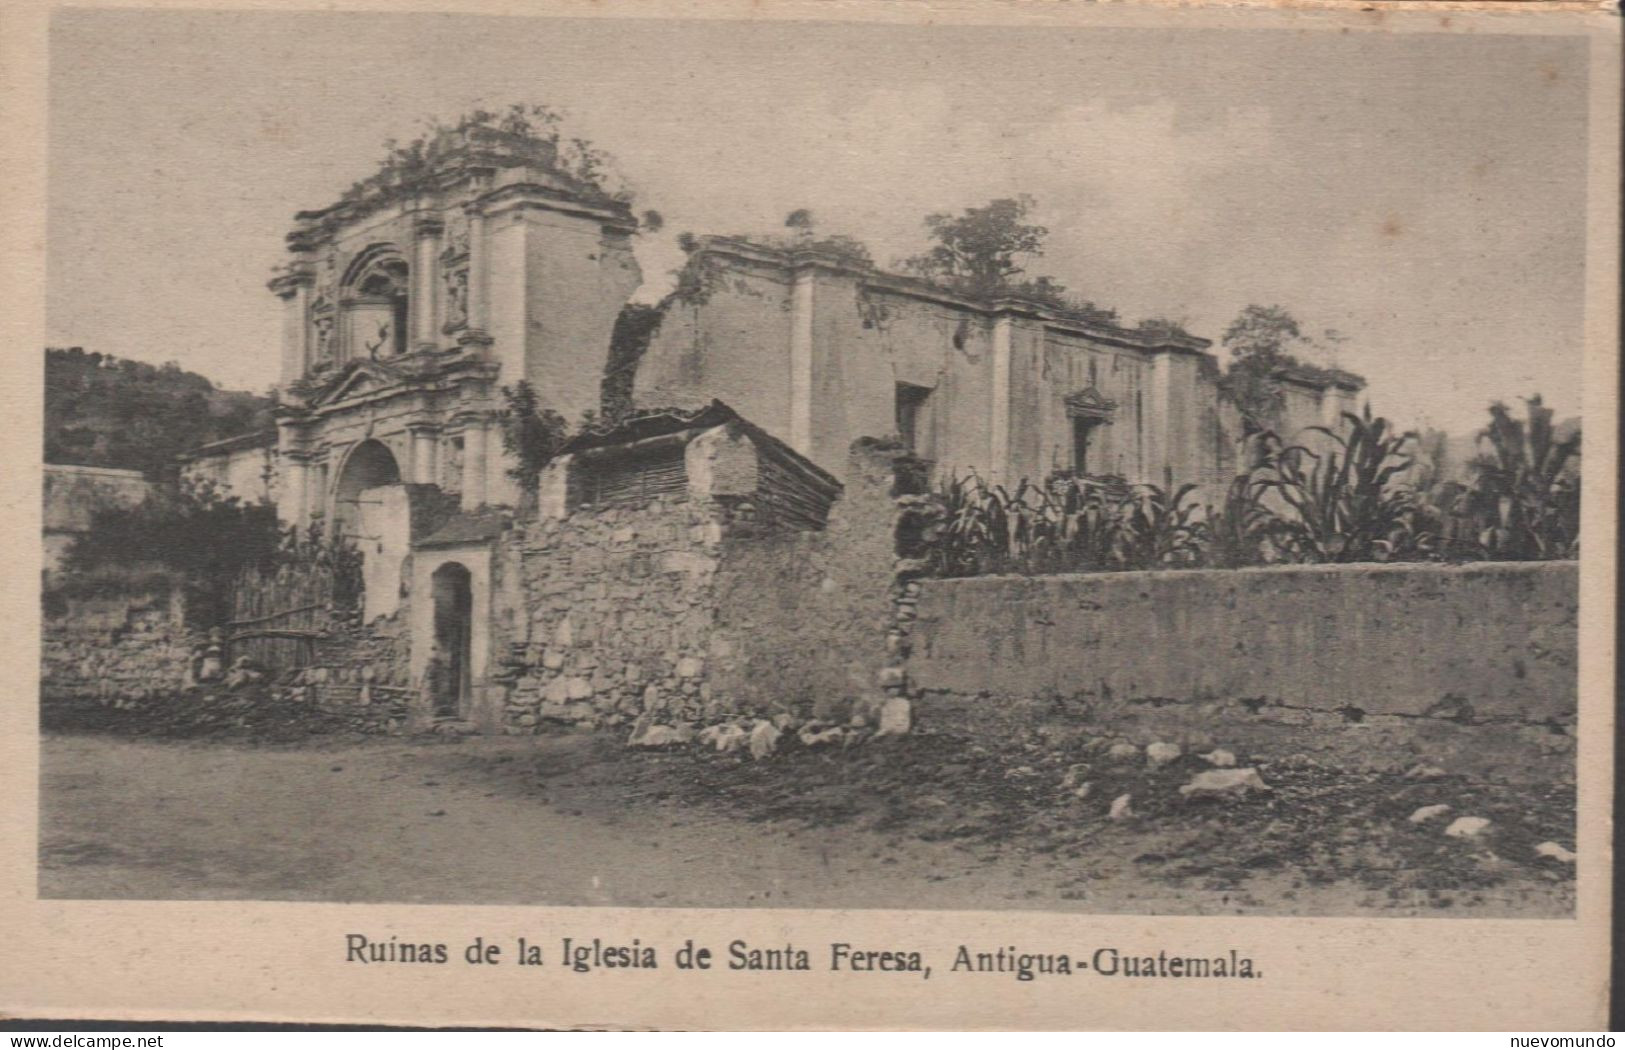 11 tarjetas de Antigua Guatemala editadas por C. Francisco Juárez A. de Antigua Guatemala